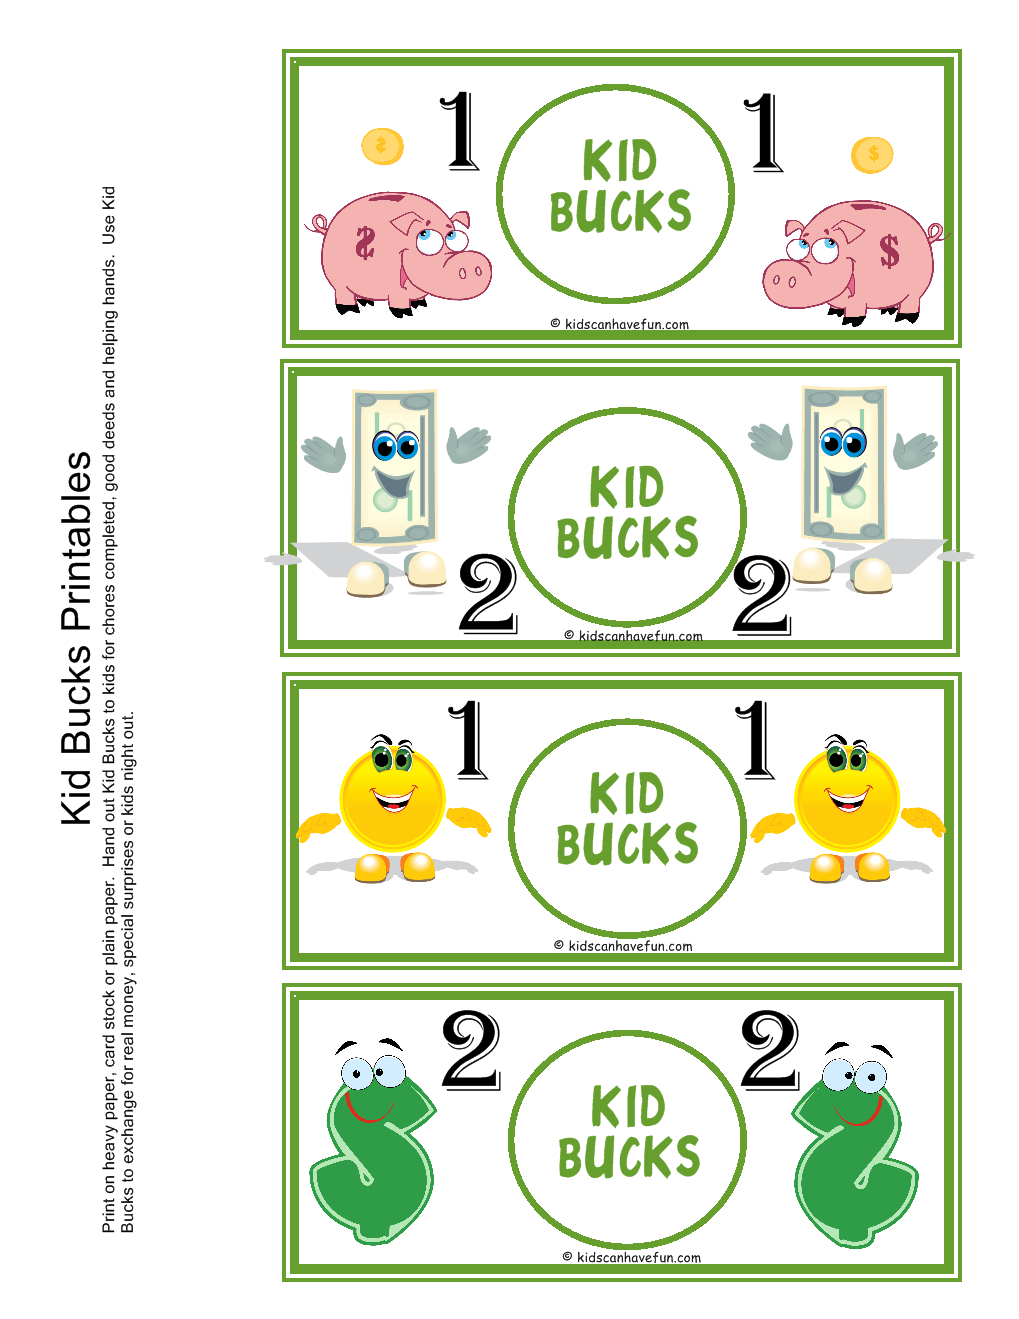 kid-bucks-home-behavior-banking-chores-for-kids-kids-rewards